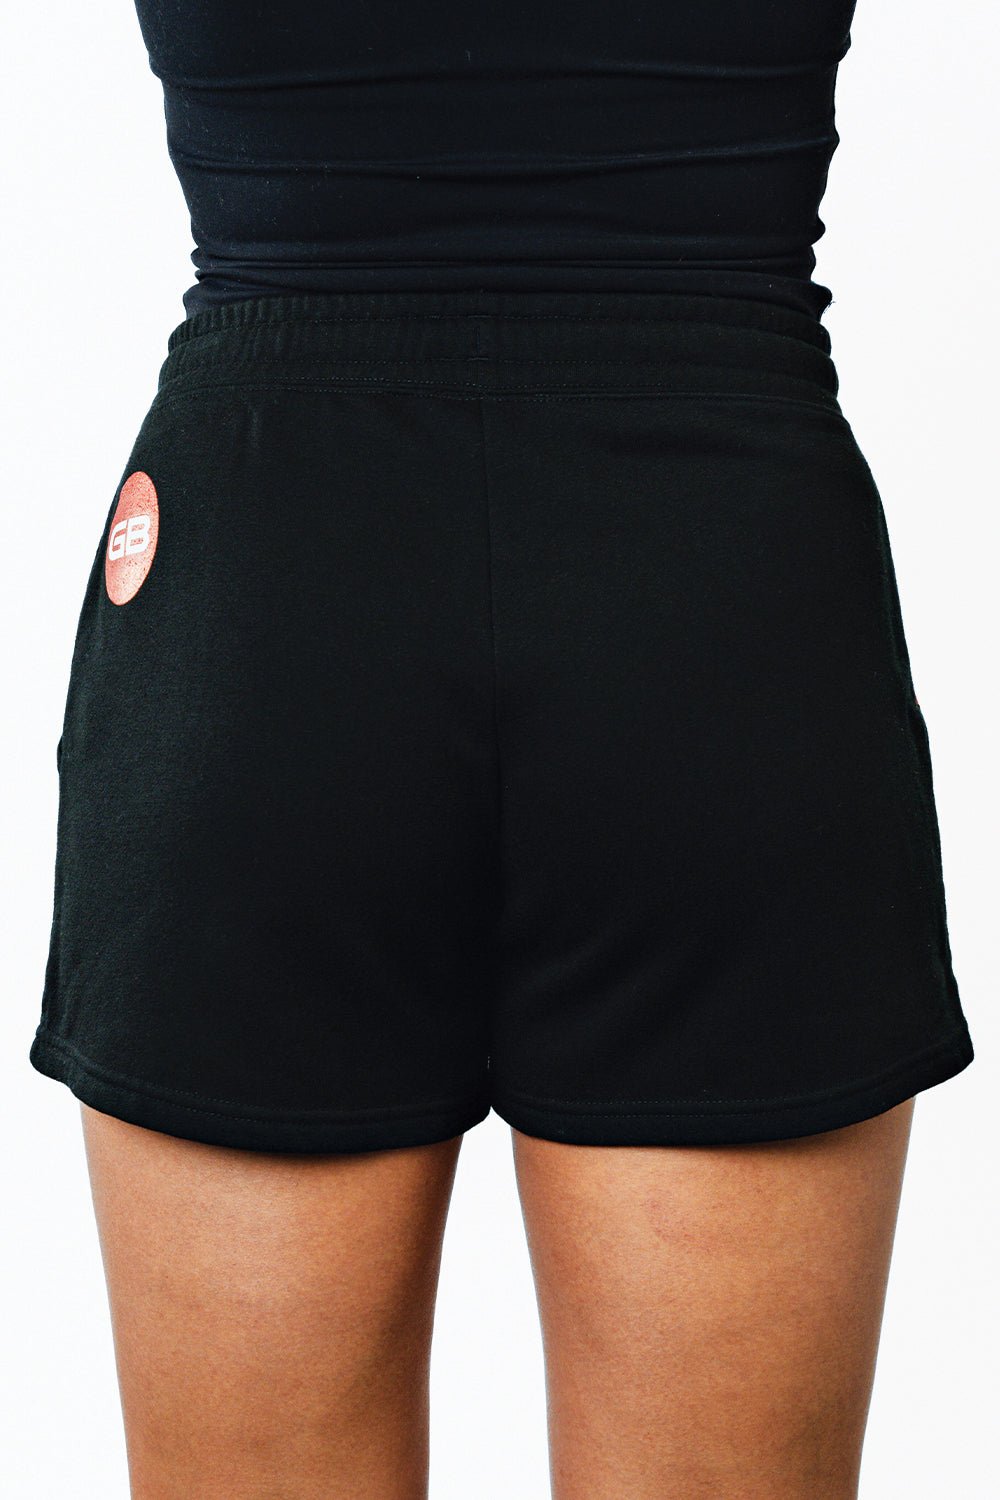 Equipe Womens Shorts - Black